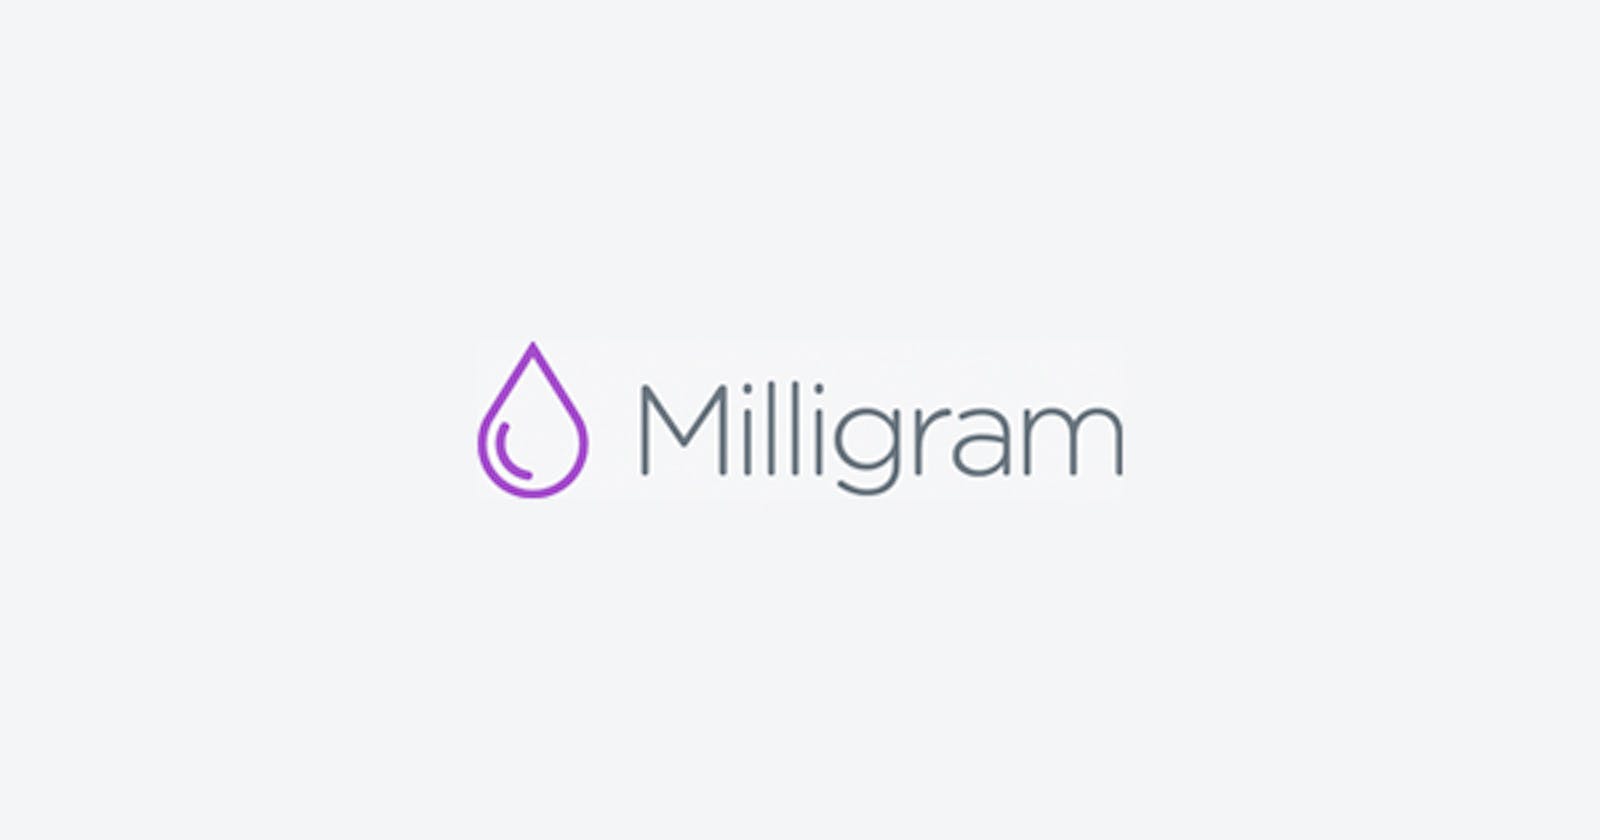 Milligram - A minimalist CSS framework